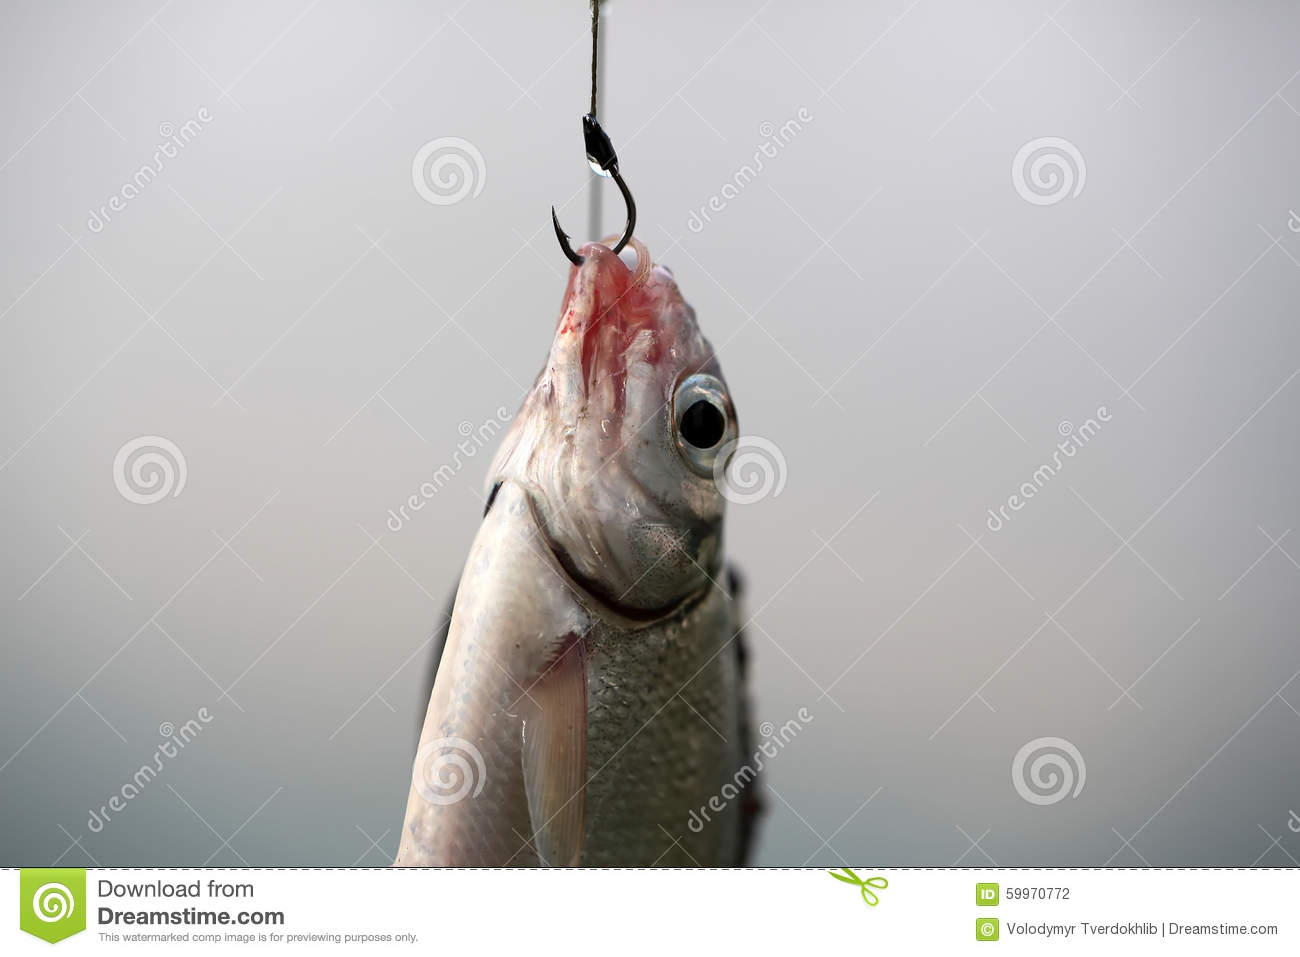 fish-hook-closeup-catch-one-river-lake-little-hanging-sharp-lip-maggot-sunny-day-outdoor-water...jpg